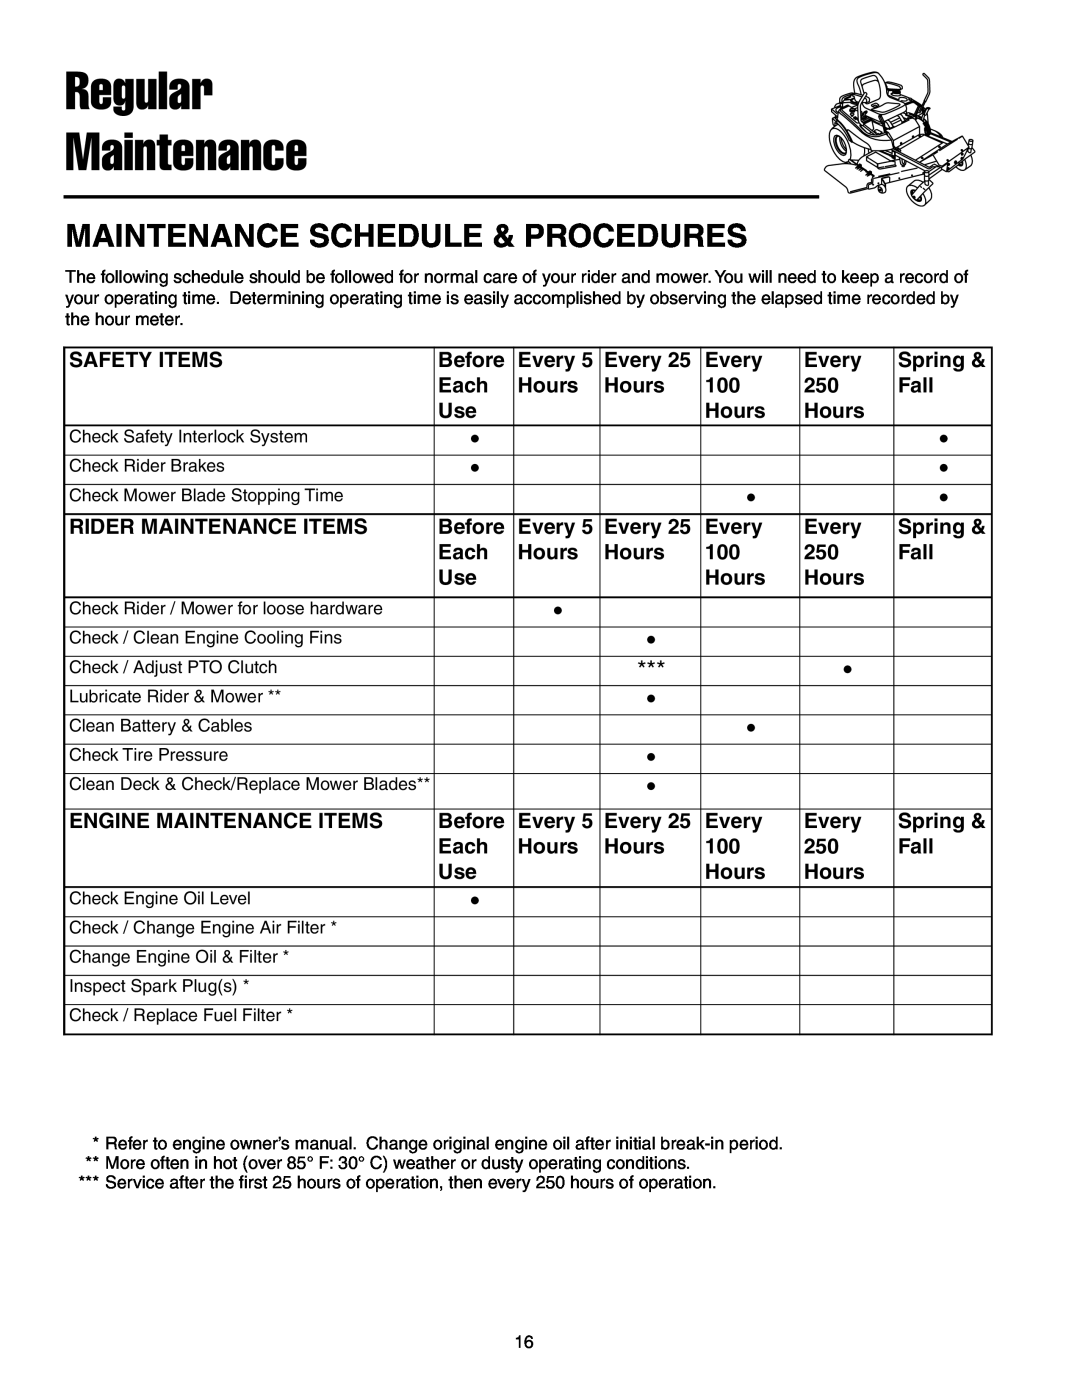 Snapper RZT20440BVE2 Regular Maintenance, Maintenance Schedule & Procedures, Safety Items, Before, Every, Spring, Each 